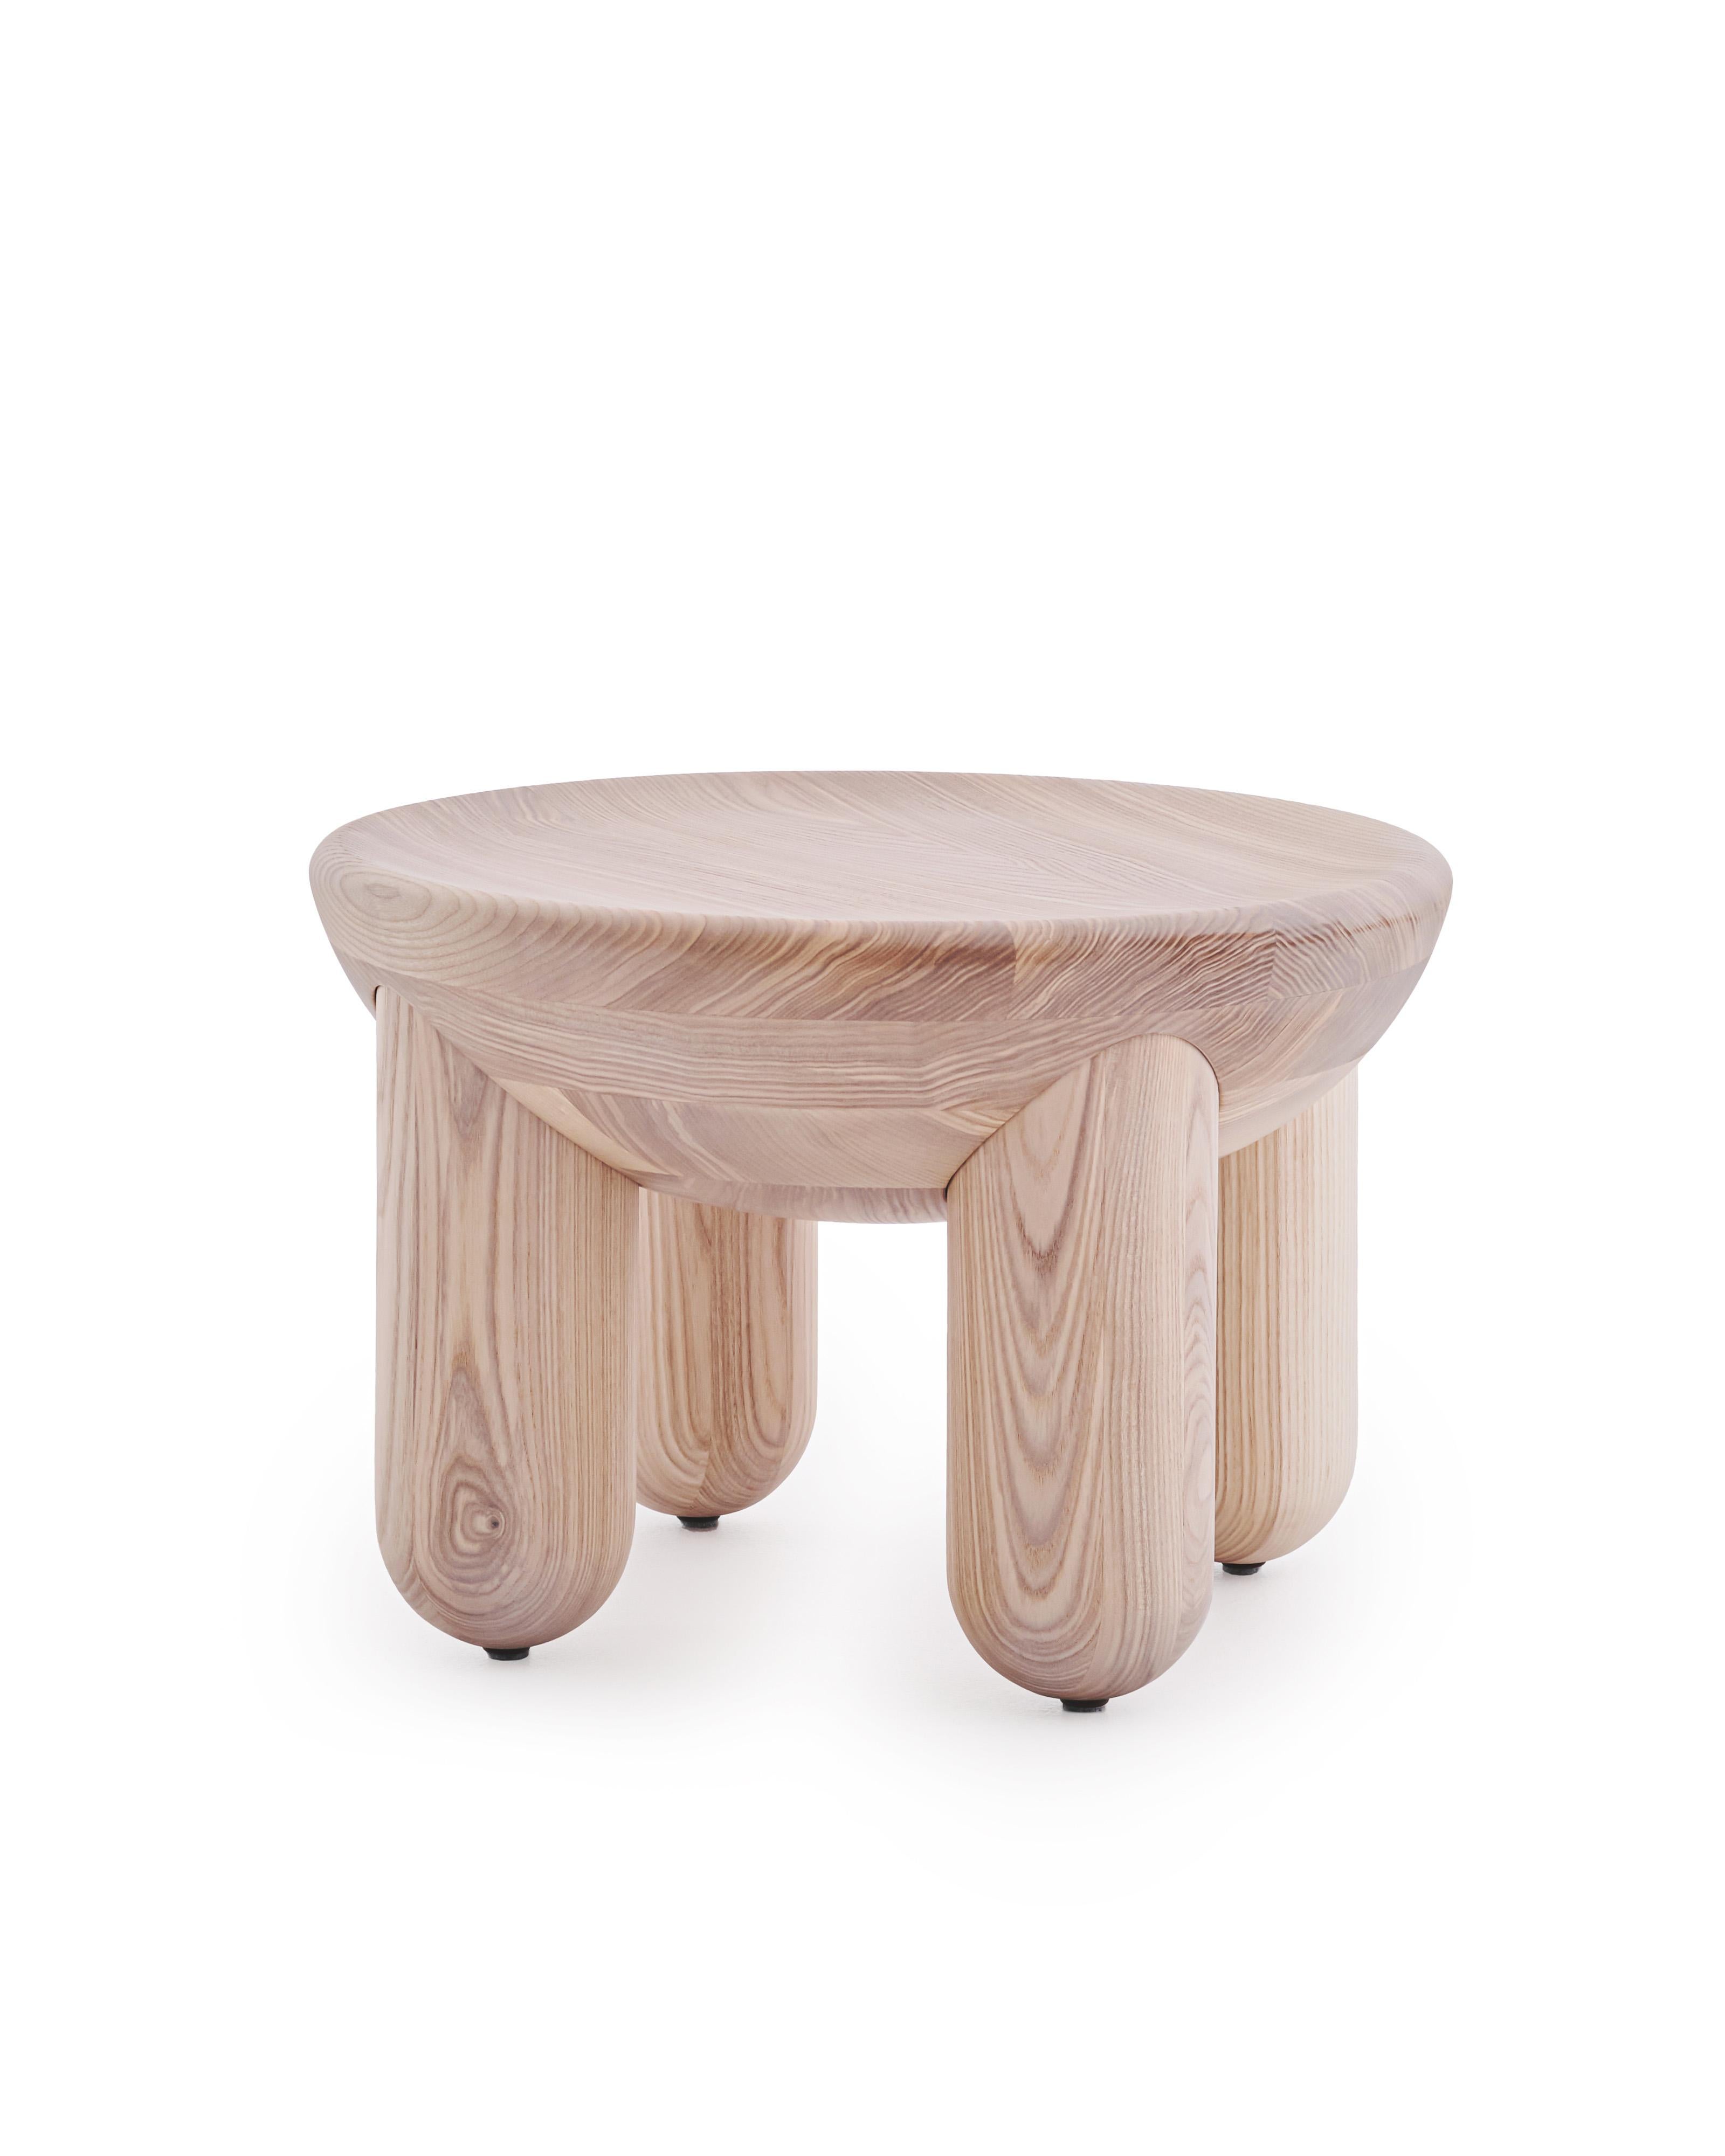 Wooden Coffee Table Freyja 1 in Walnut Finish by Noom 12